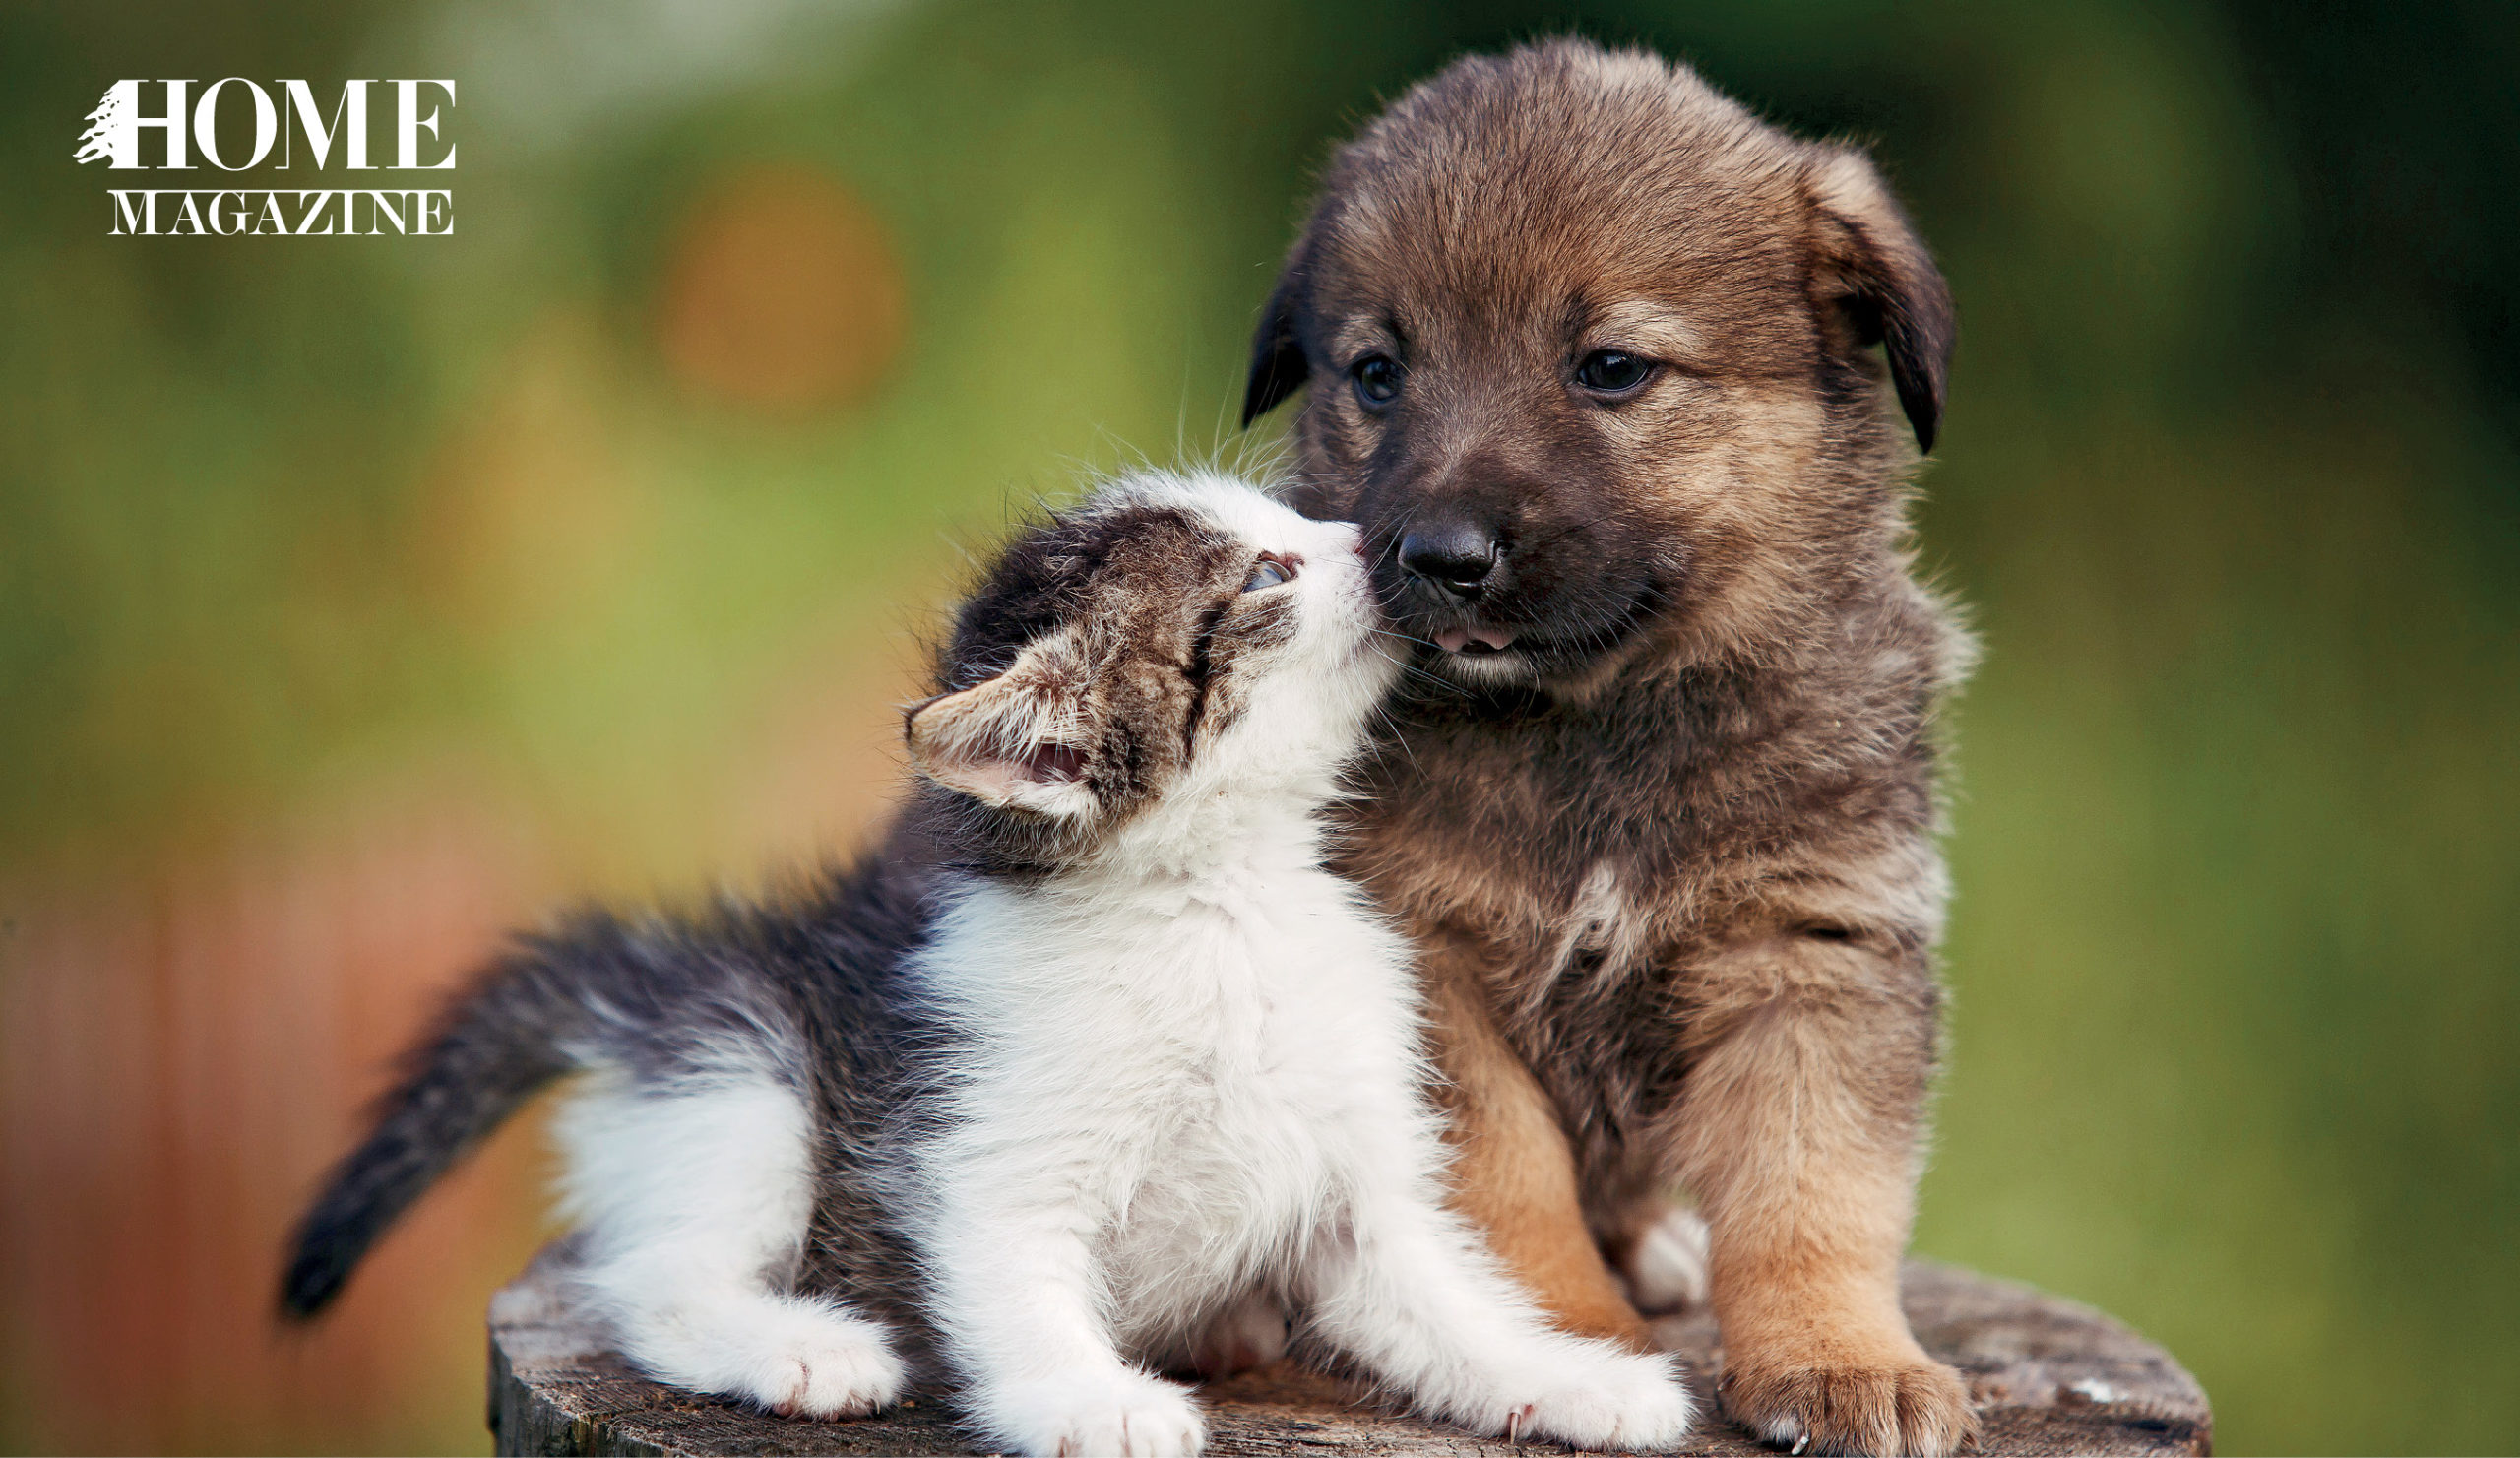 A puppy and a kitten cuddling